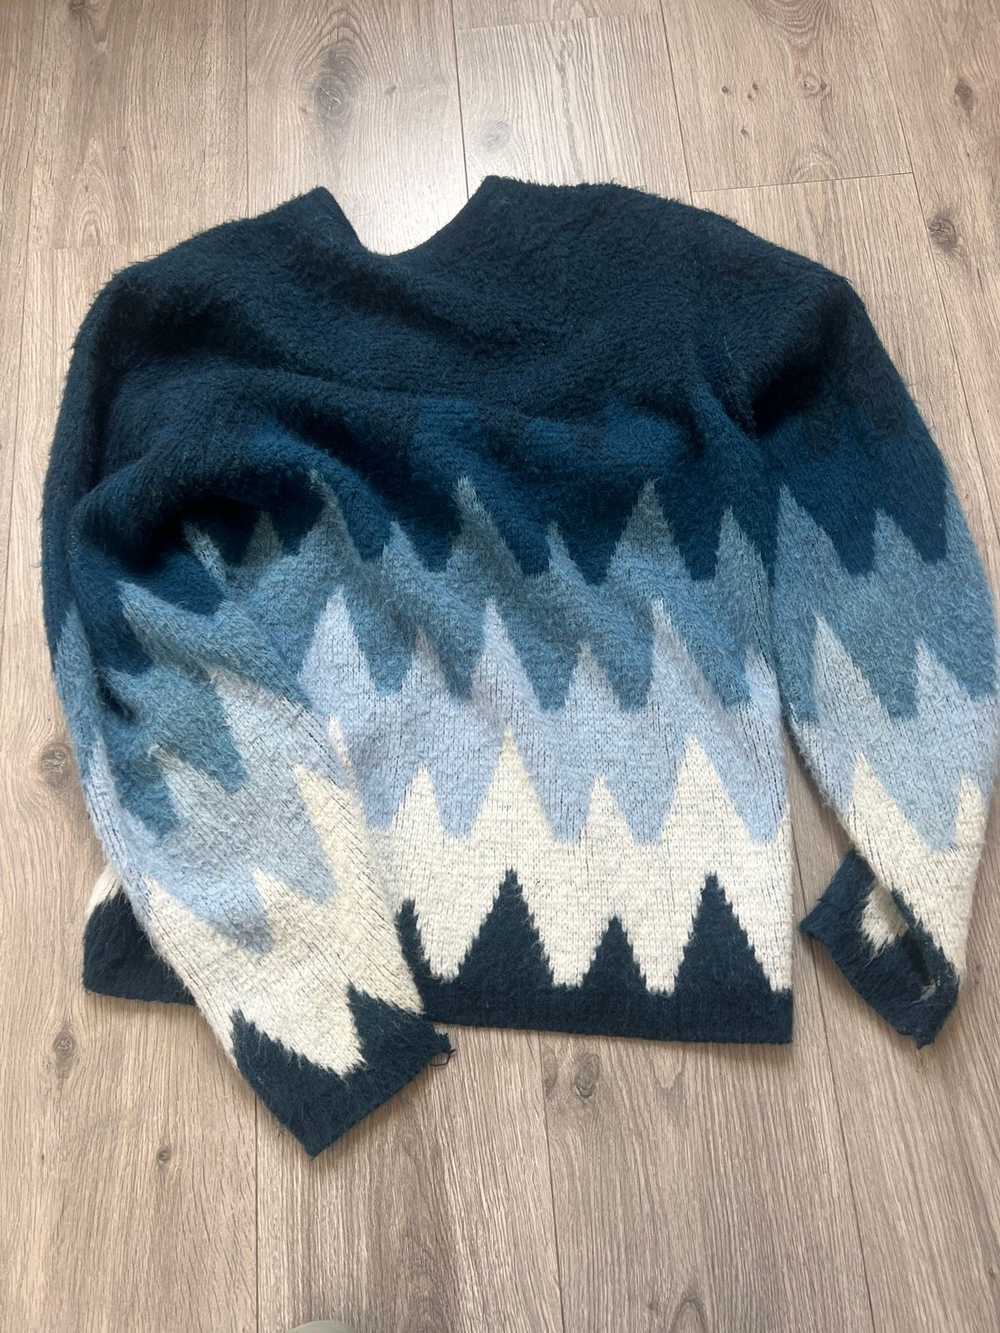 Vintage 1960s Grunge cardigan sweater as worn by … - image 7